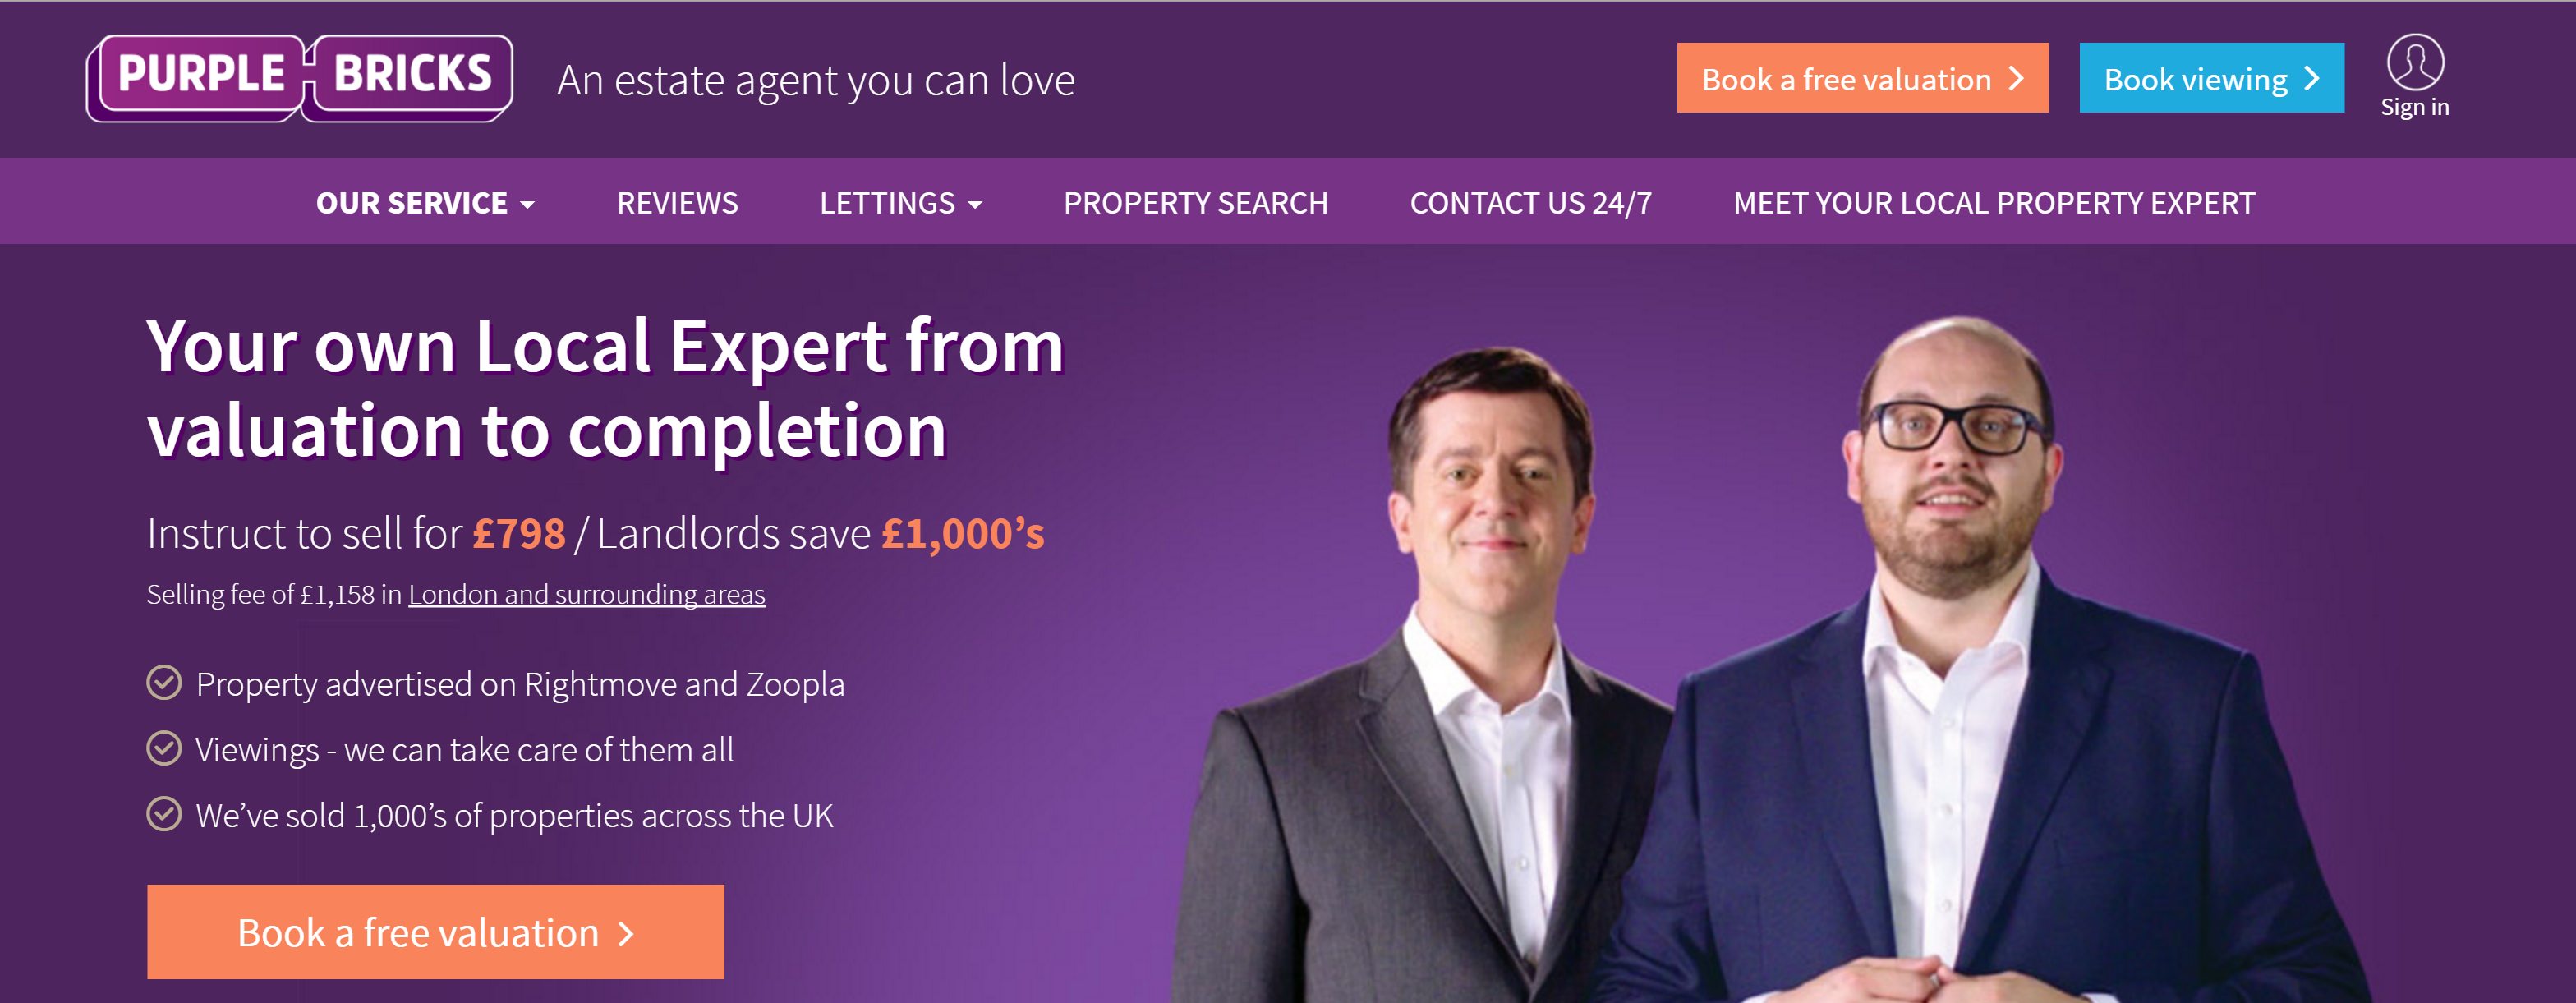 purplebricks homepage